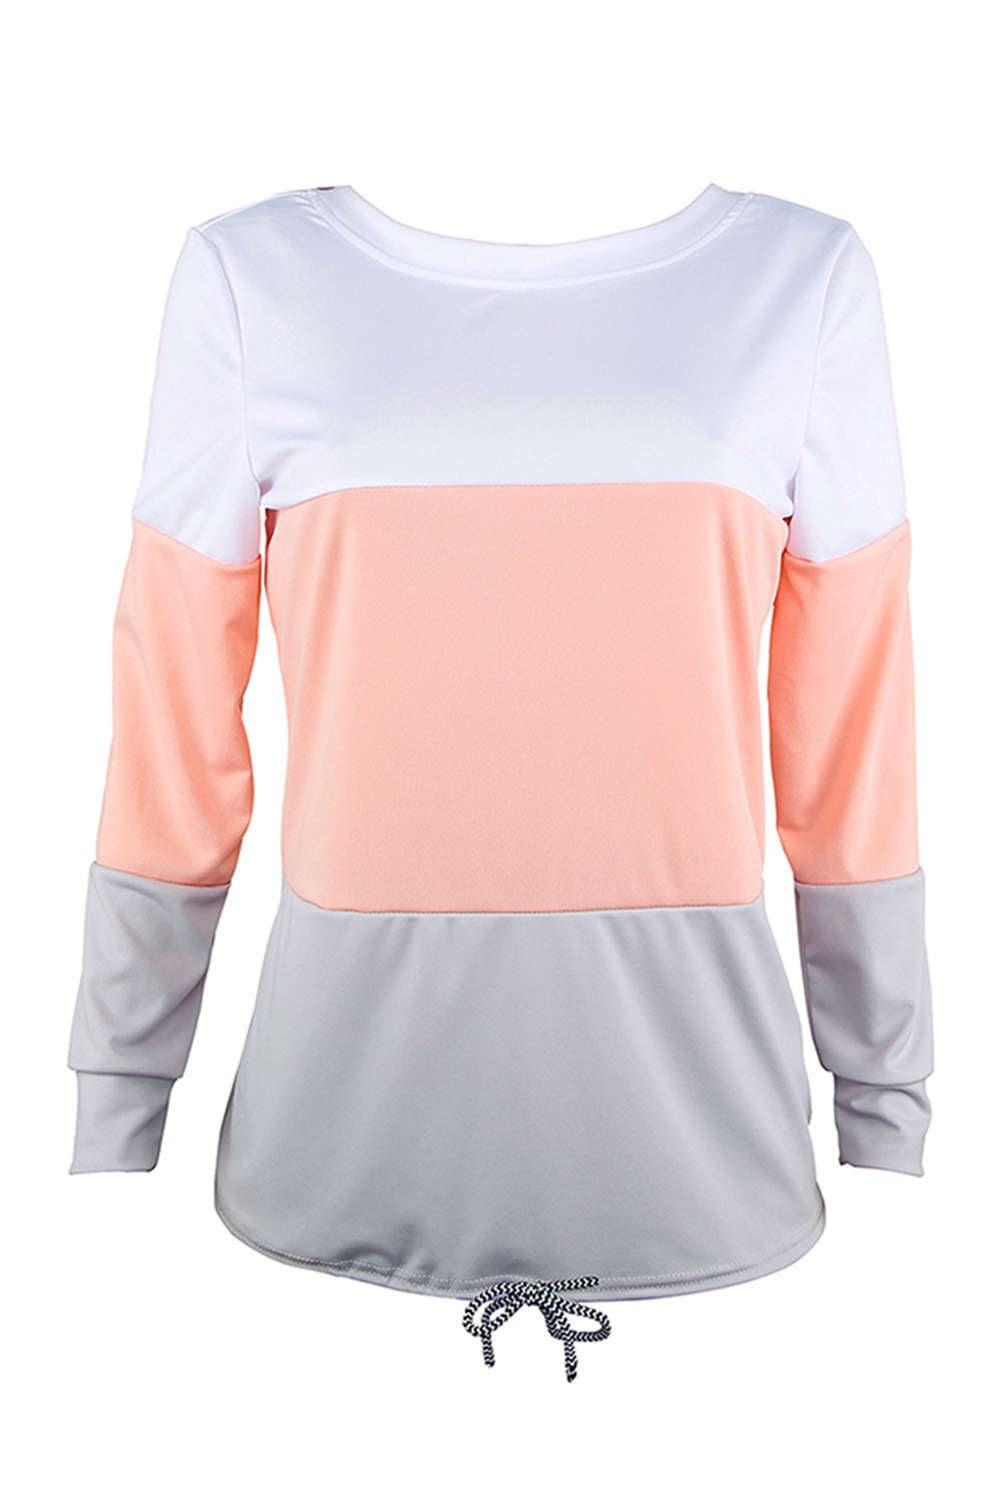 Iyasson Women's Color Block Sweatshirt